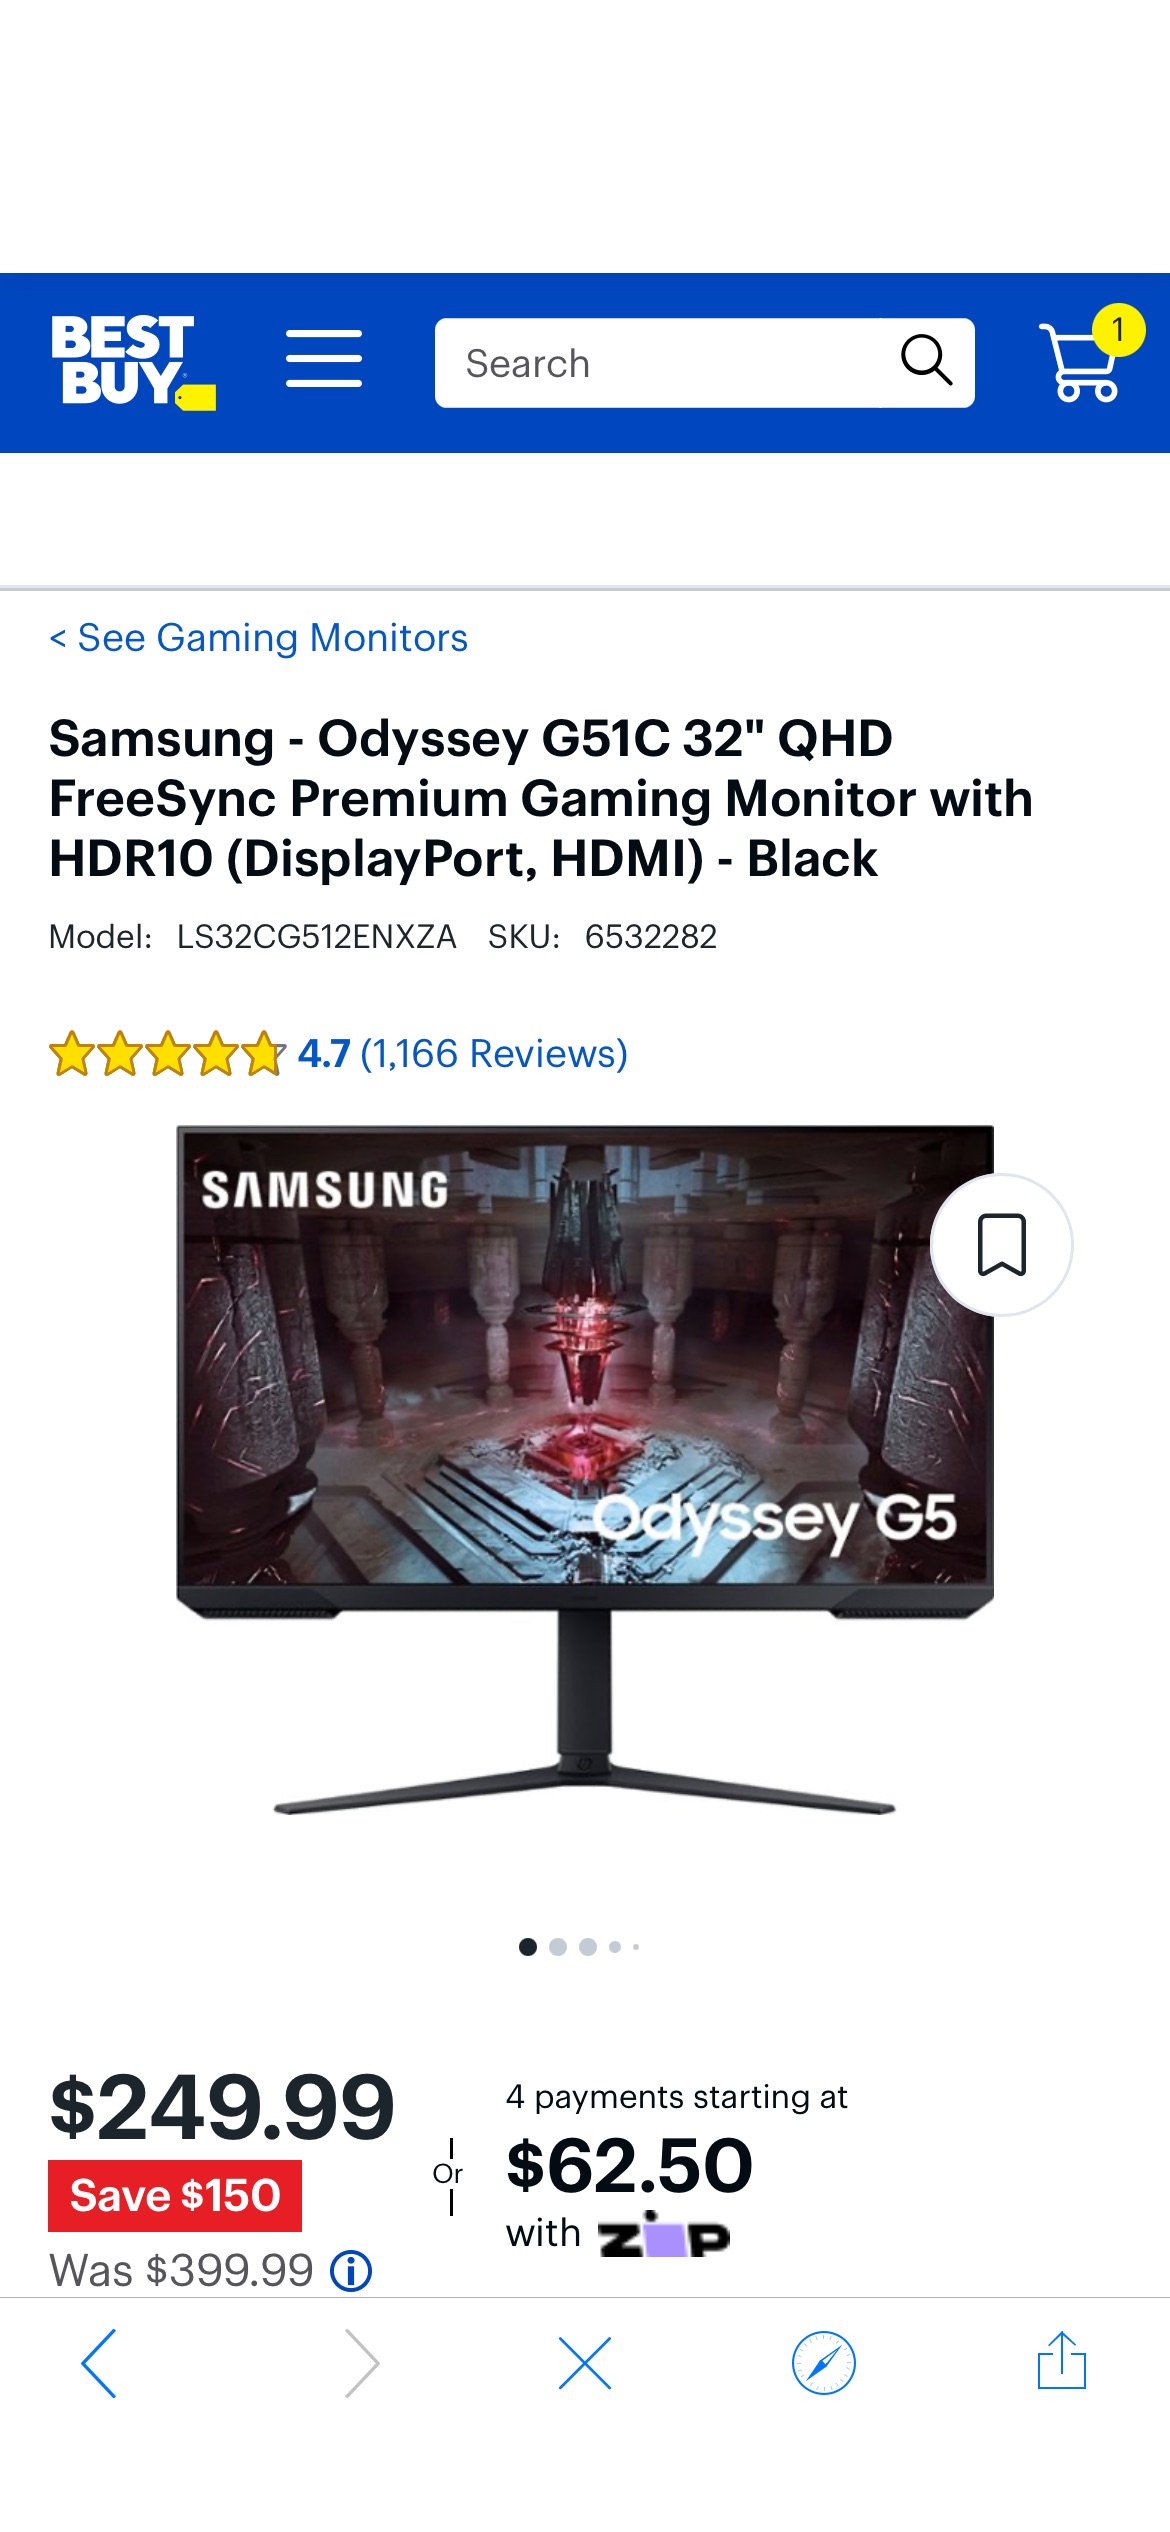 Samsung Odyssey G51C 32" QHD FreeSync Premium Gaming Monitor with HDR10 (DisplayPort, HDMI) Black LS32CG512ENXZA - Best Buy